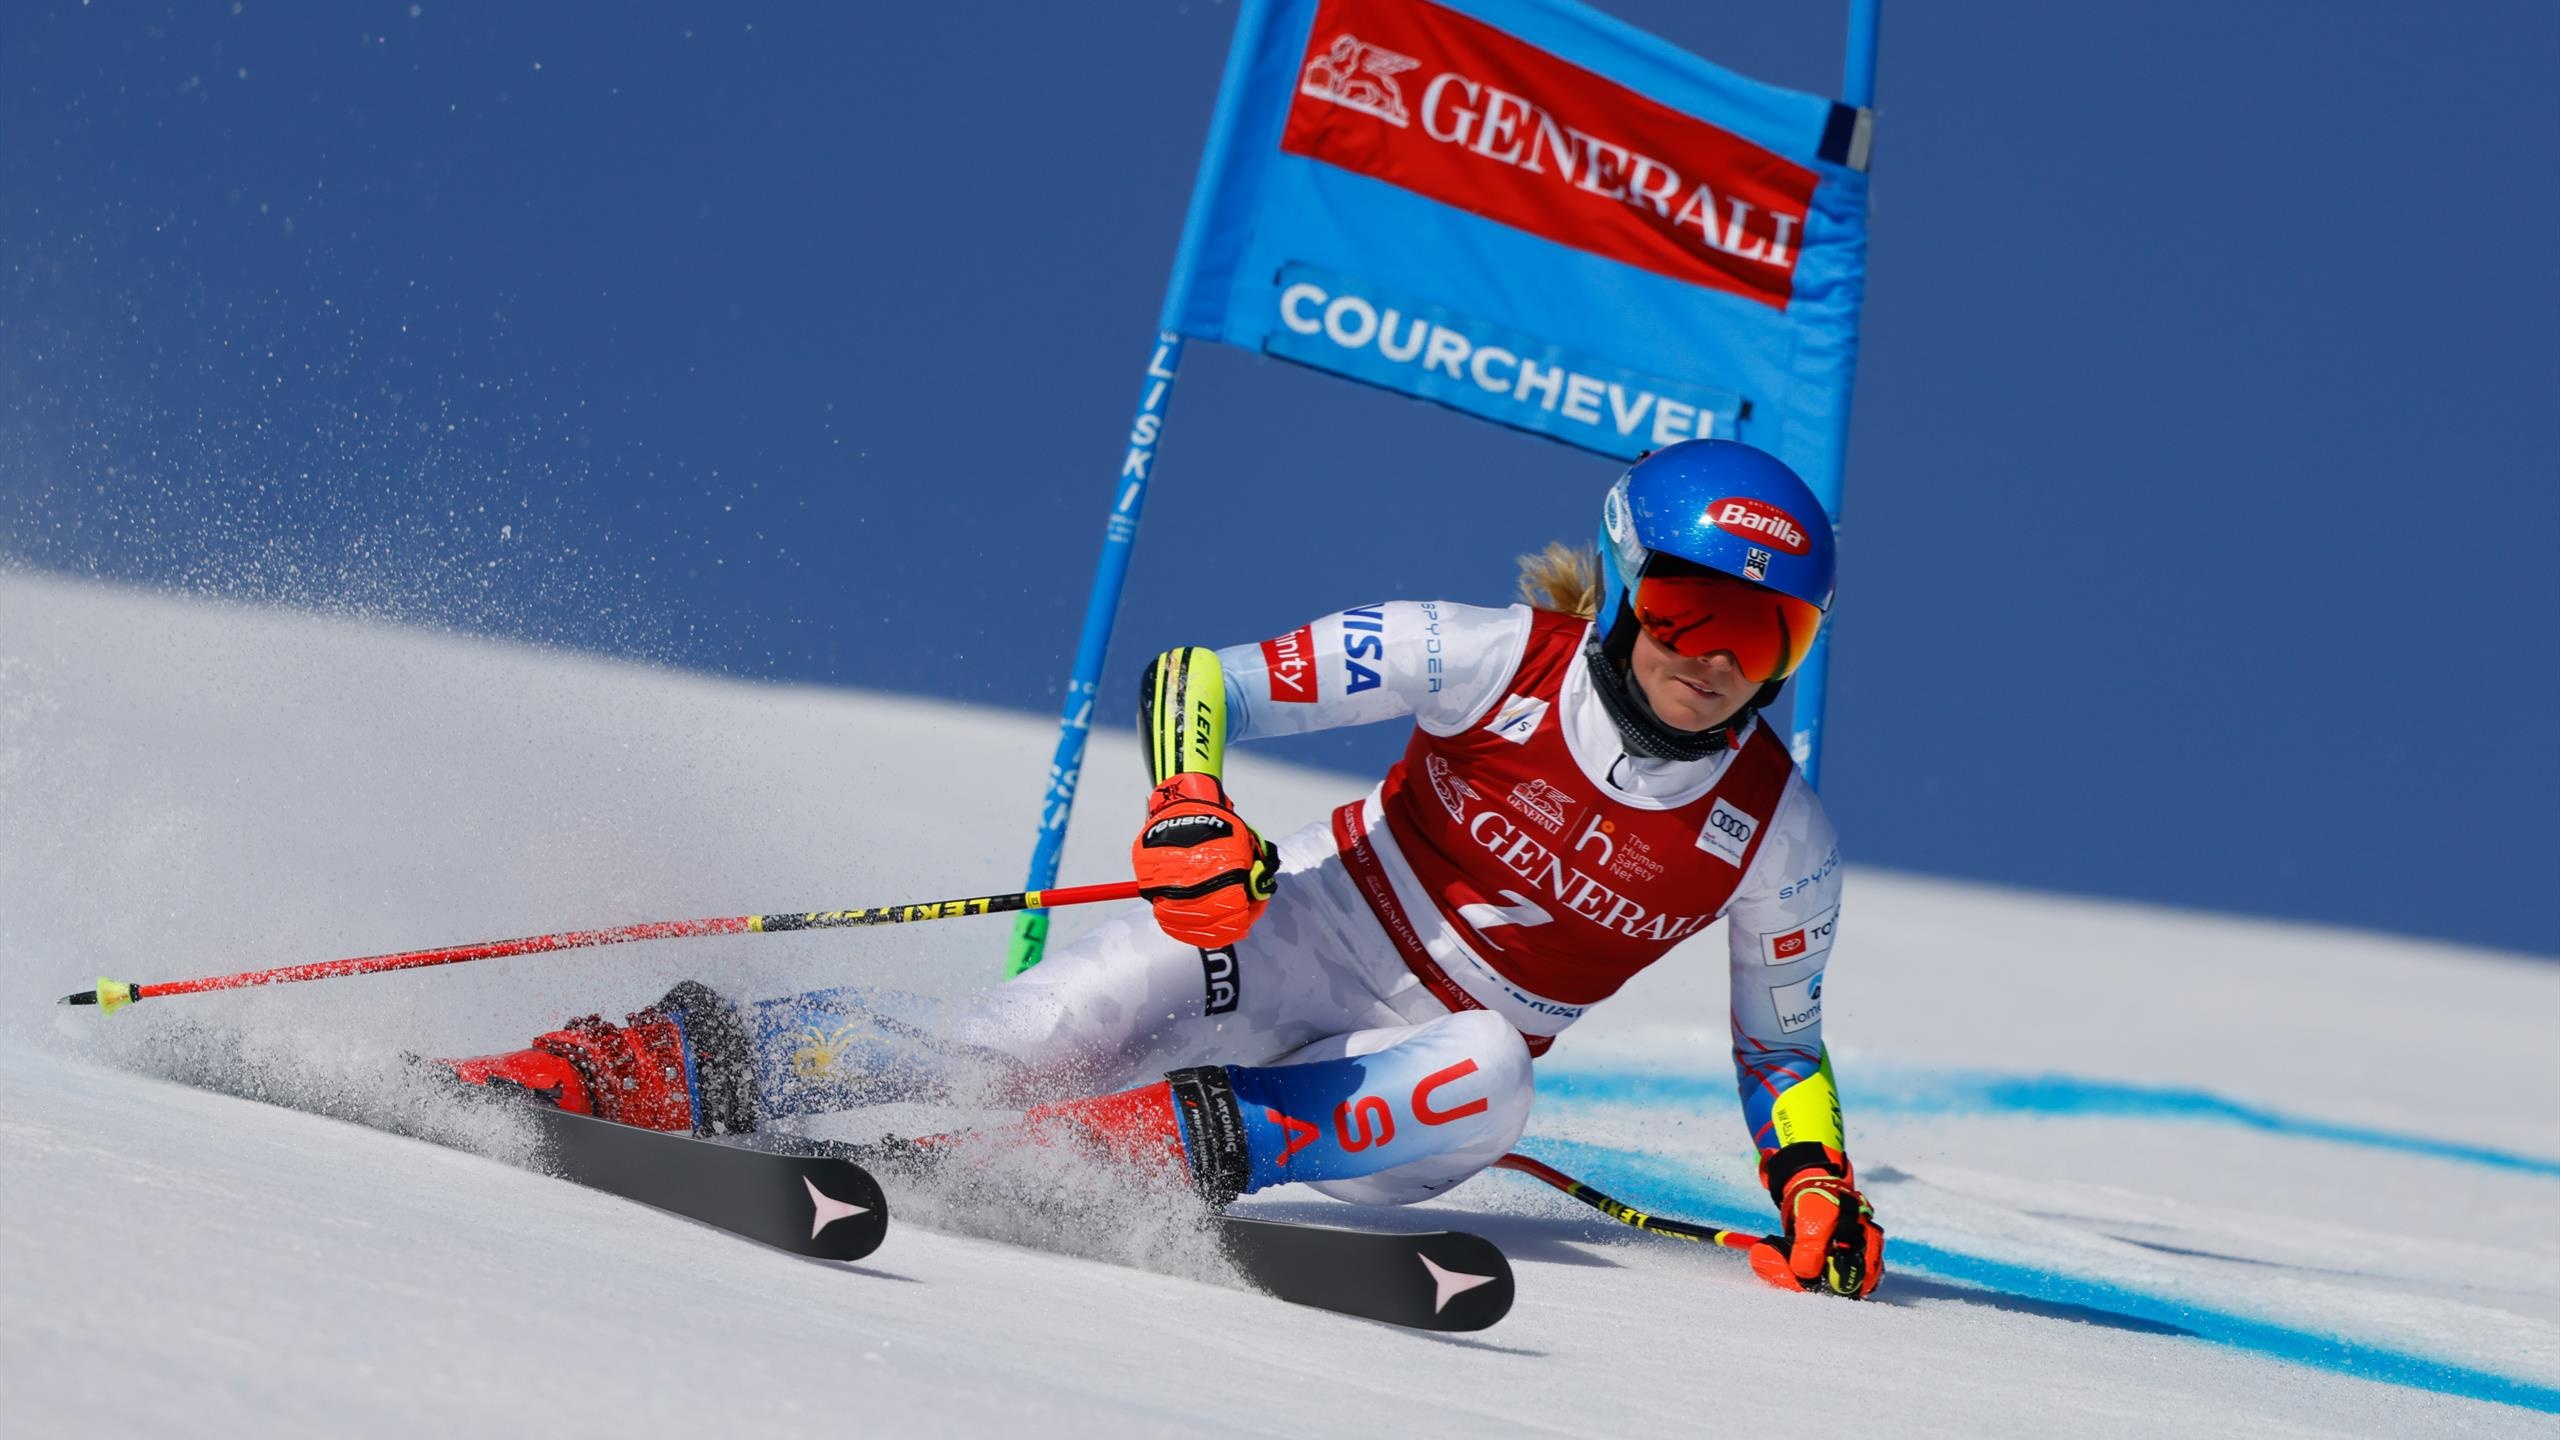 Slalom: Mikaela Shiffrin, Durchgang, Skiing between poles and gates, Gliding on a snow, USA. 2560x1440 HD Wallpaper.